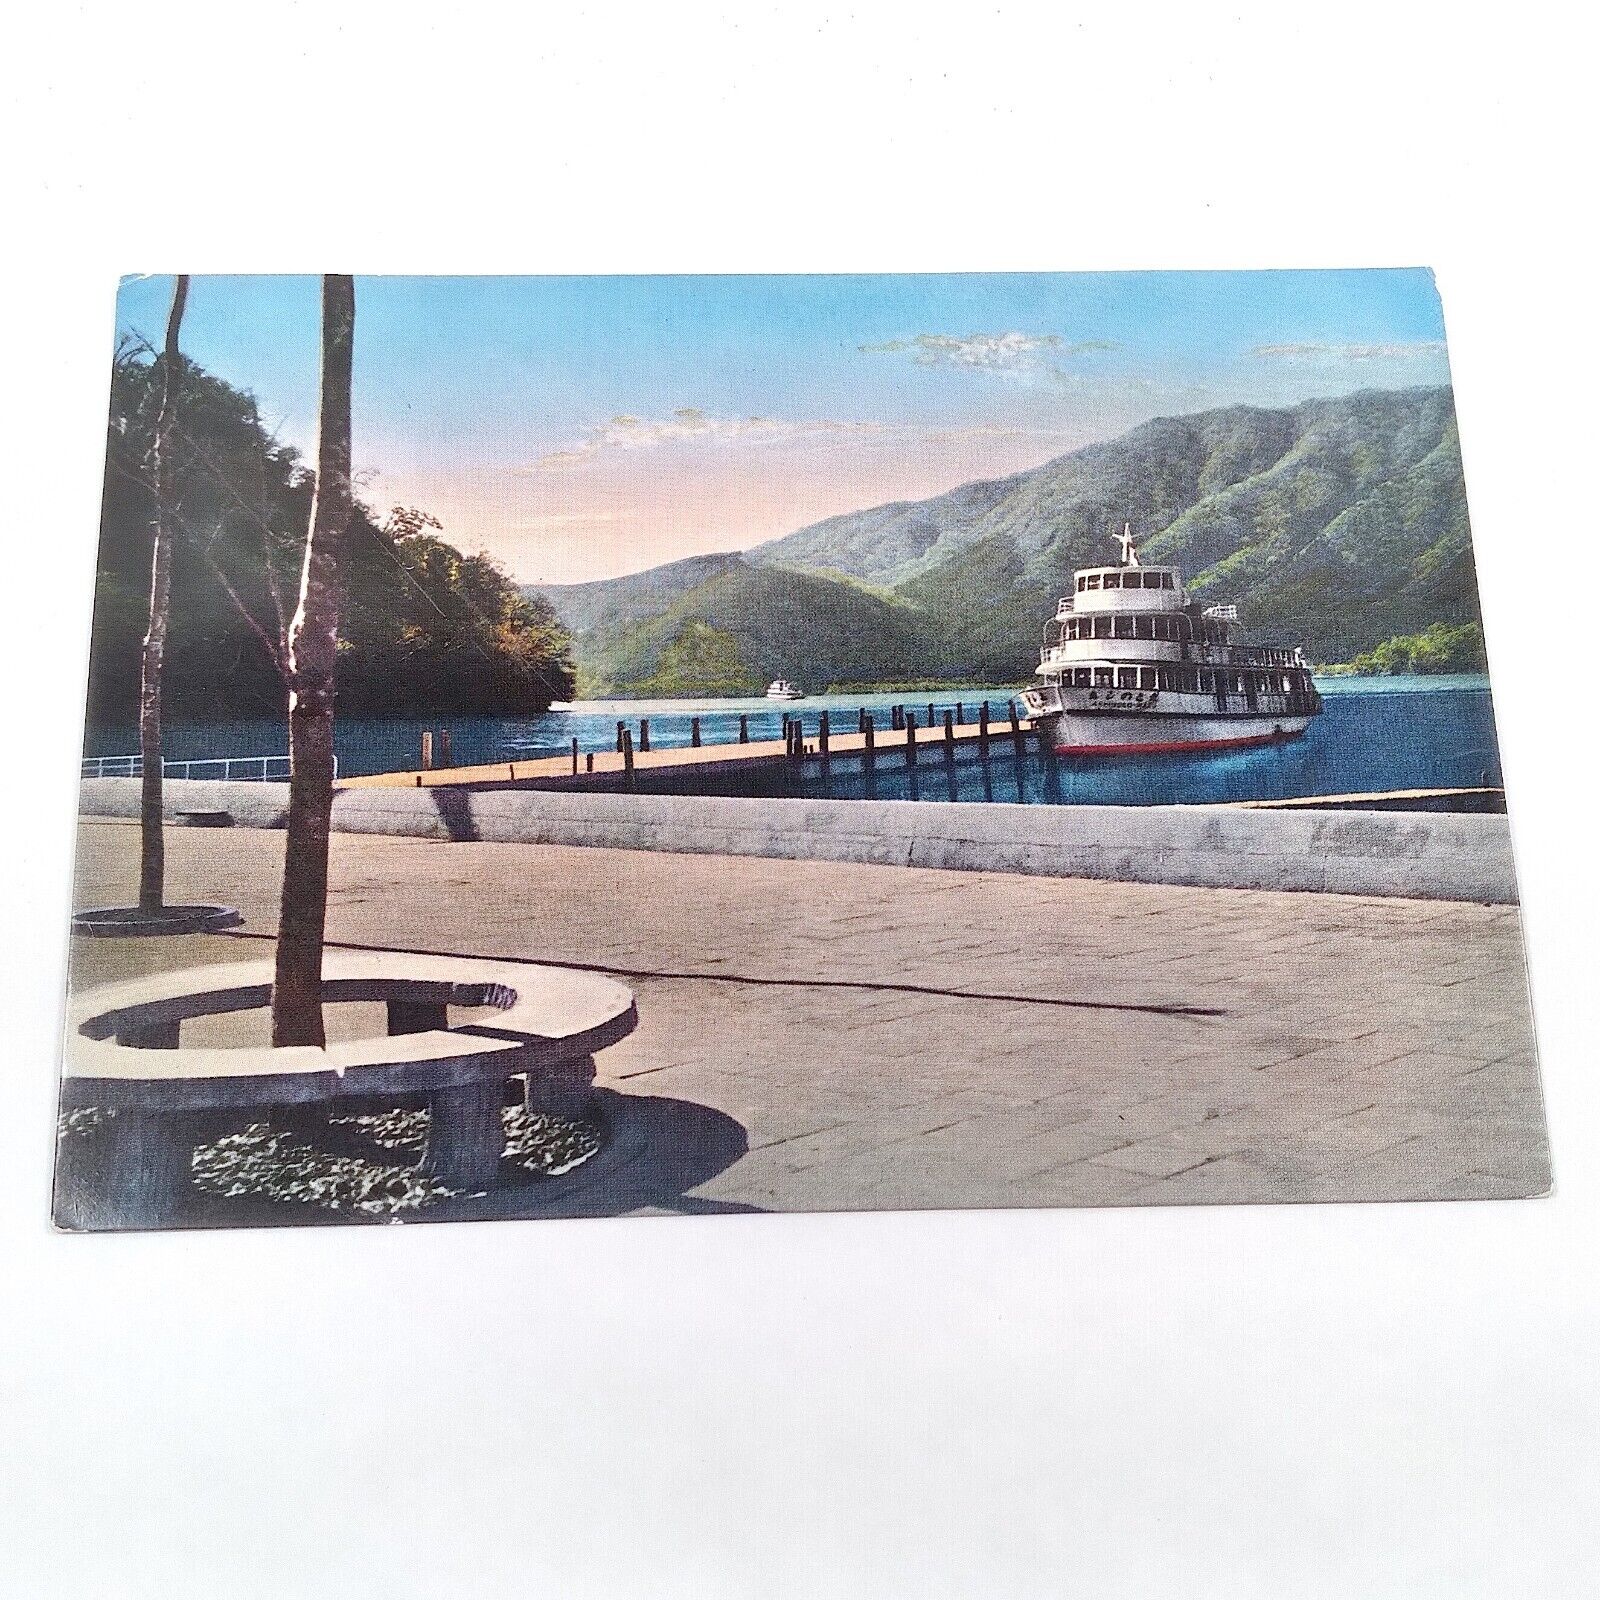 Japan -Ashi Lake Tour Boat- Kojiri Pier National Park Posted 1961 Postcard 4x6